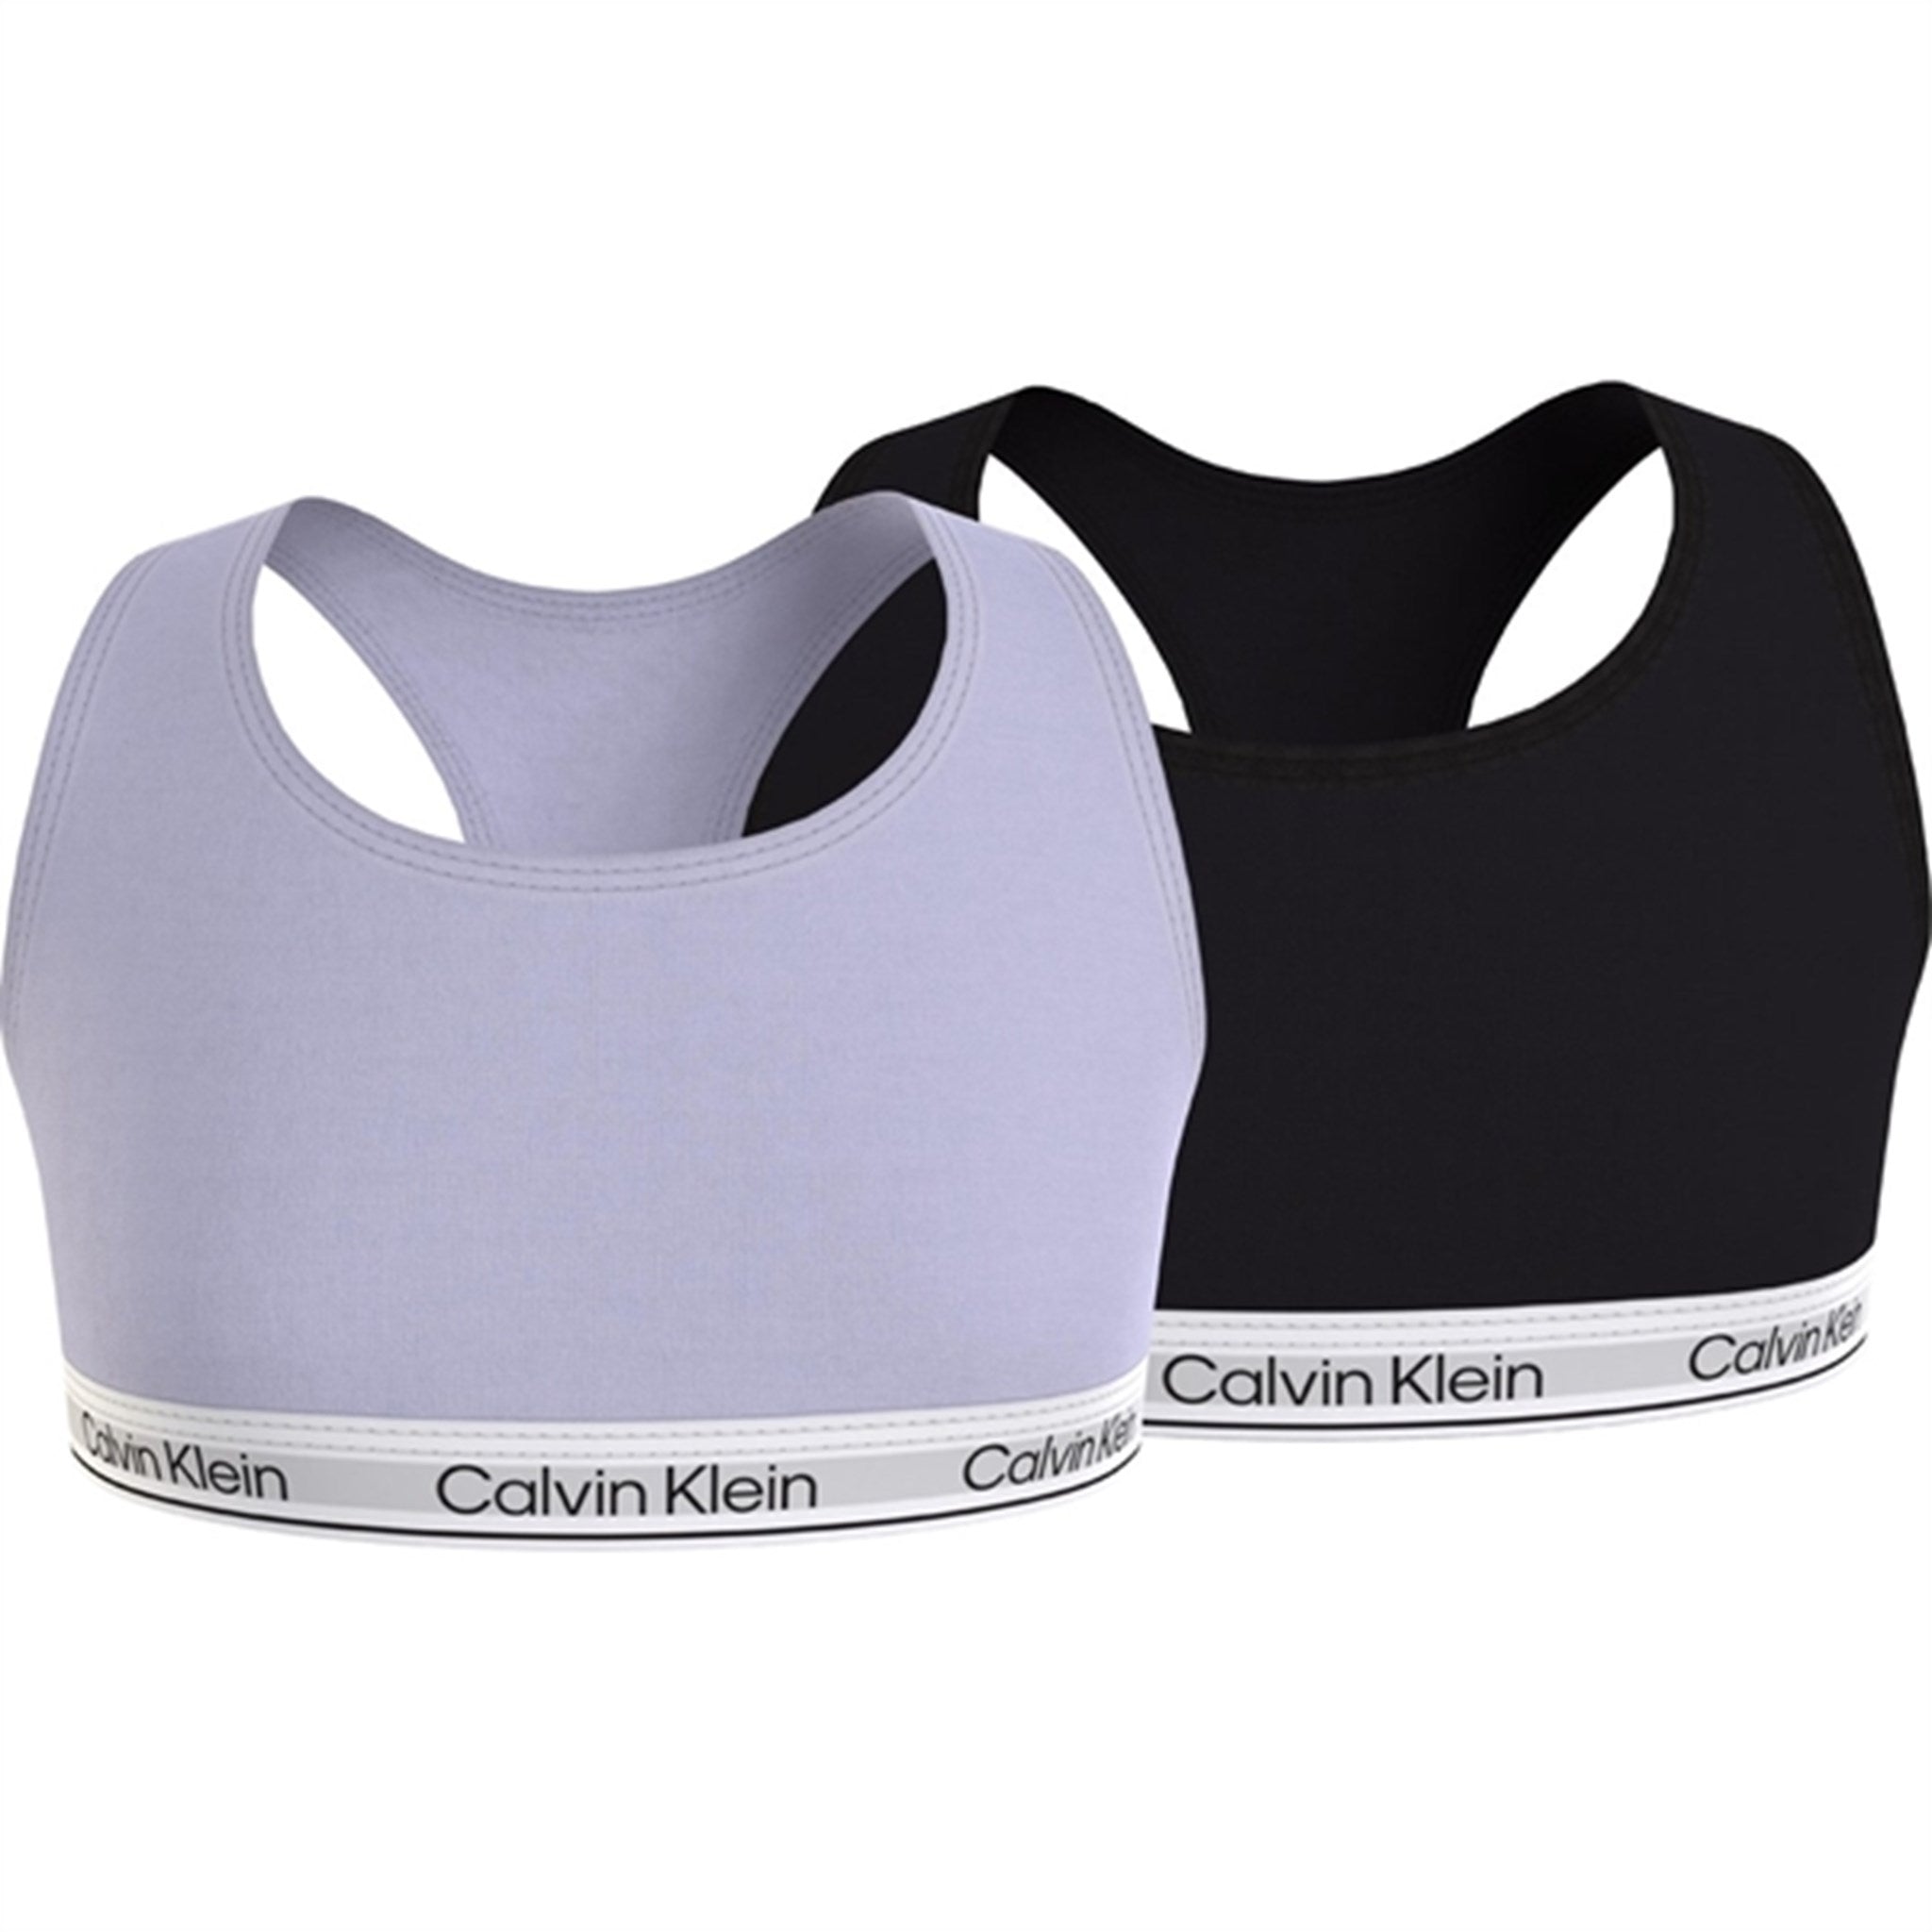 Calvin Klein Bralette 2-pak Lavendersplash/Pvh Black